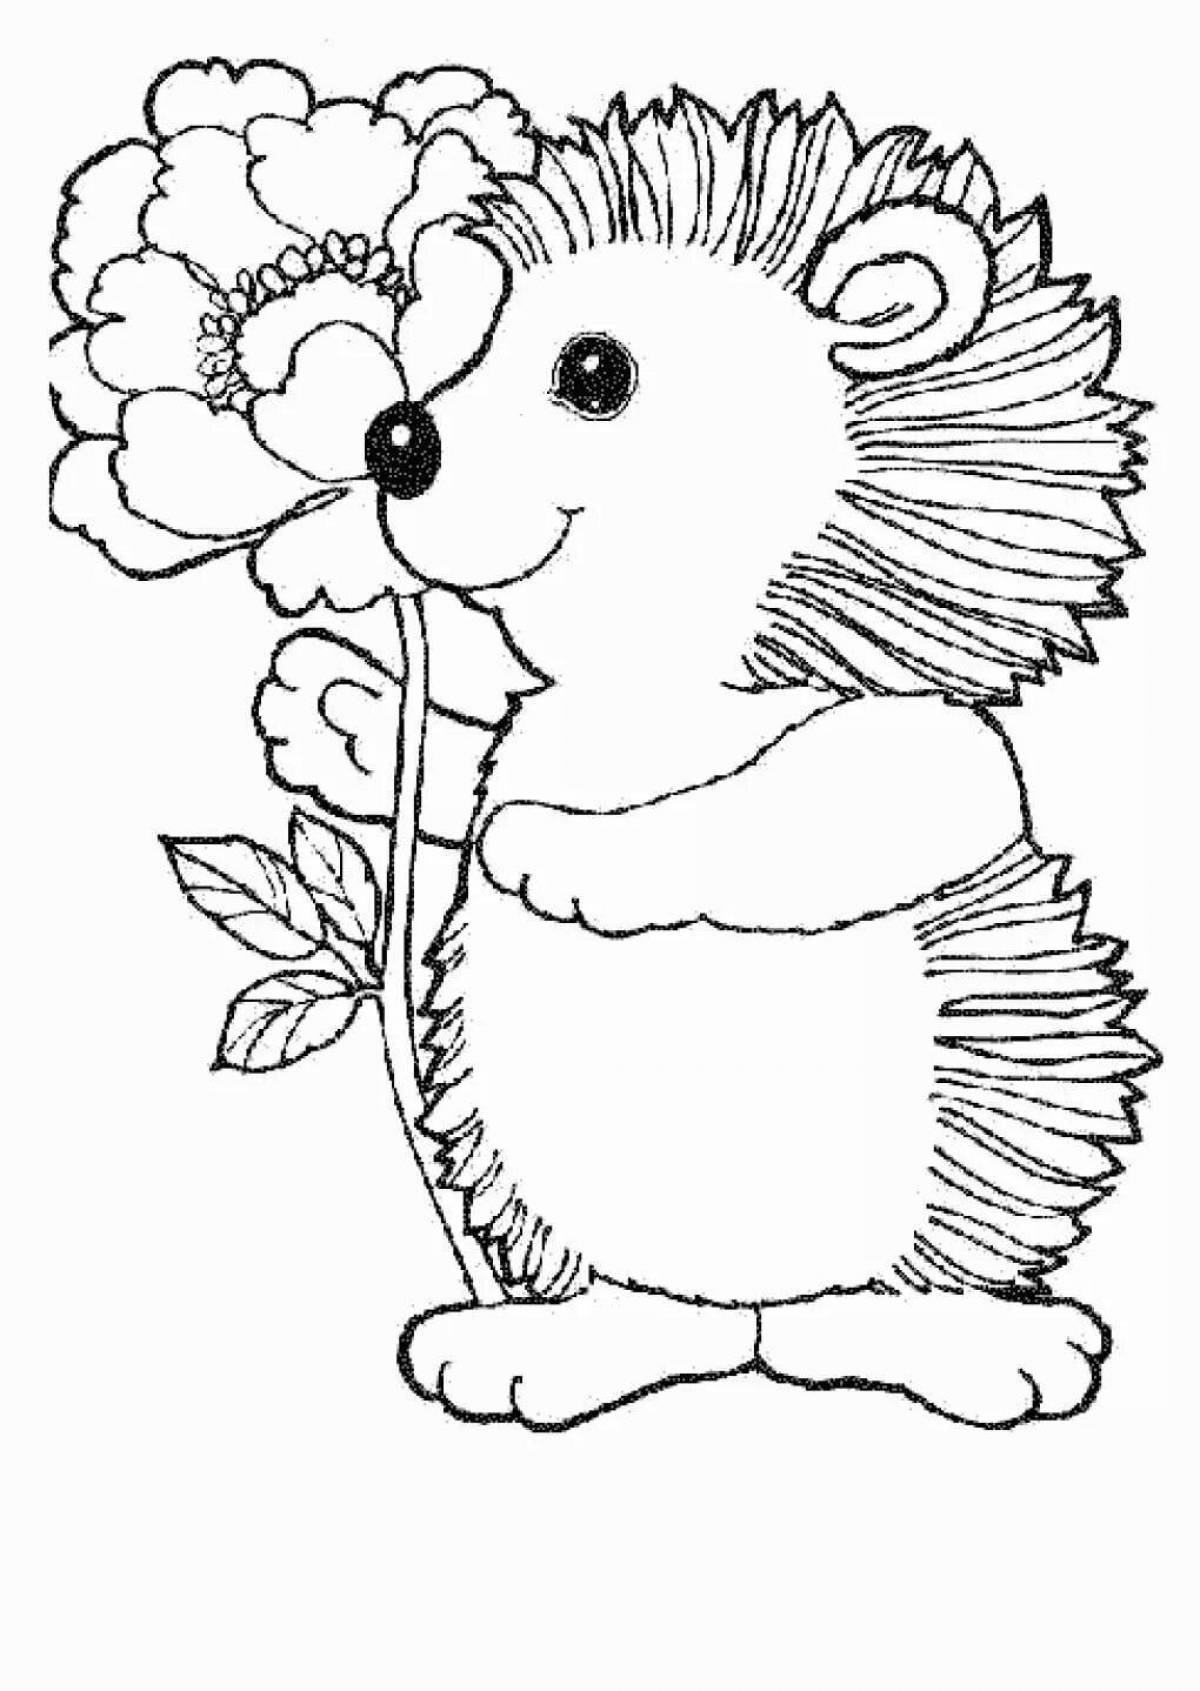 Coloring book smiling cute hedgehog